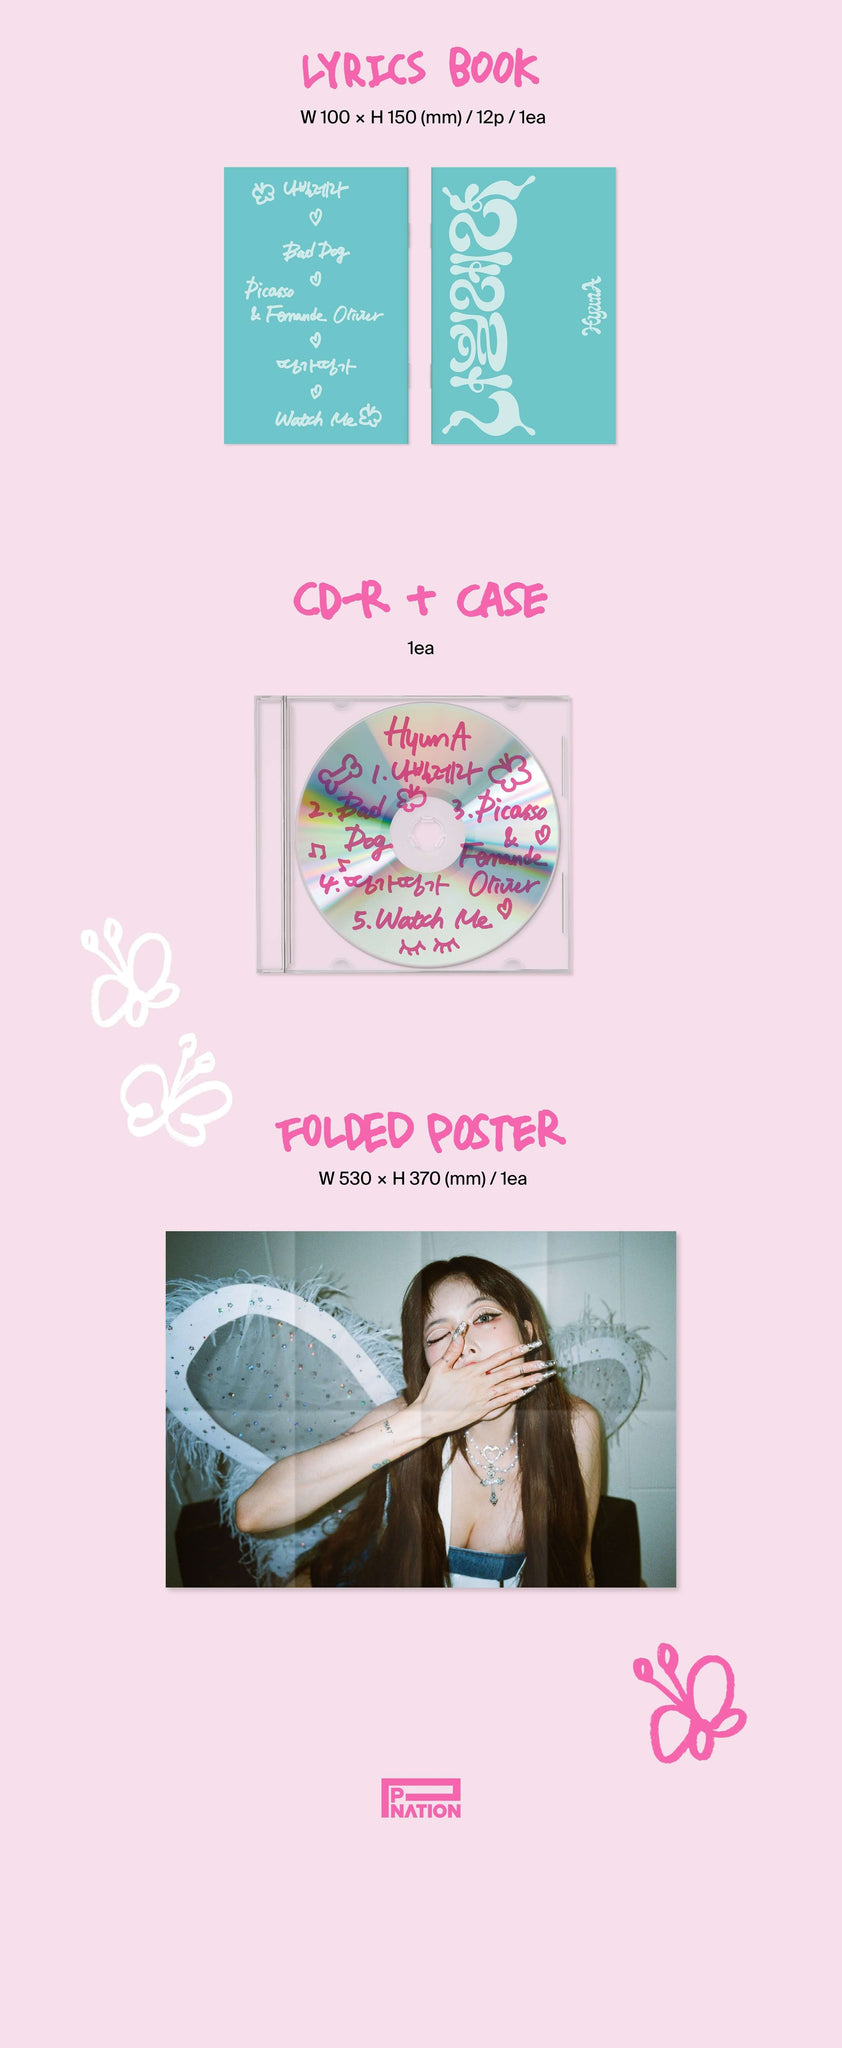 HyunA 8th Mini Album Nabillera Inclusions Lyrics Book CD Folded Poster